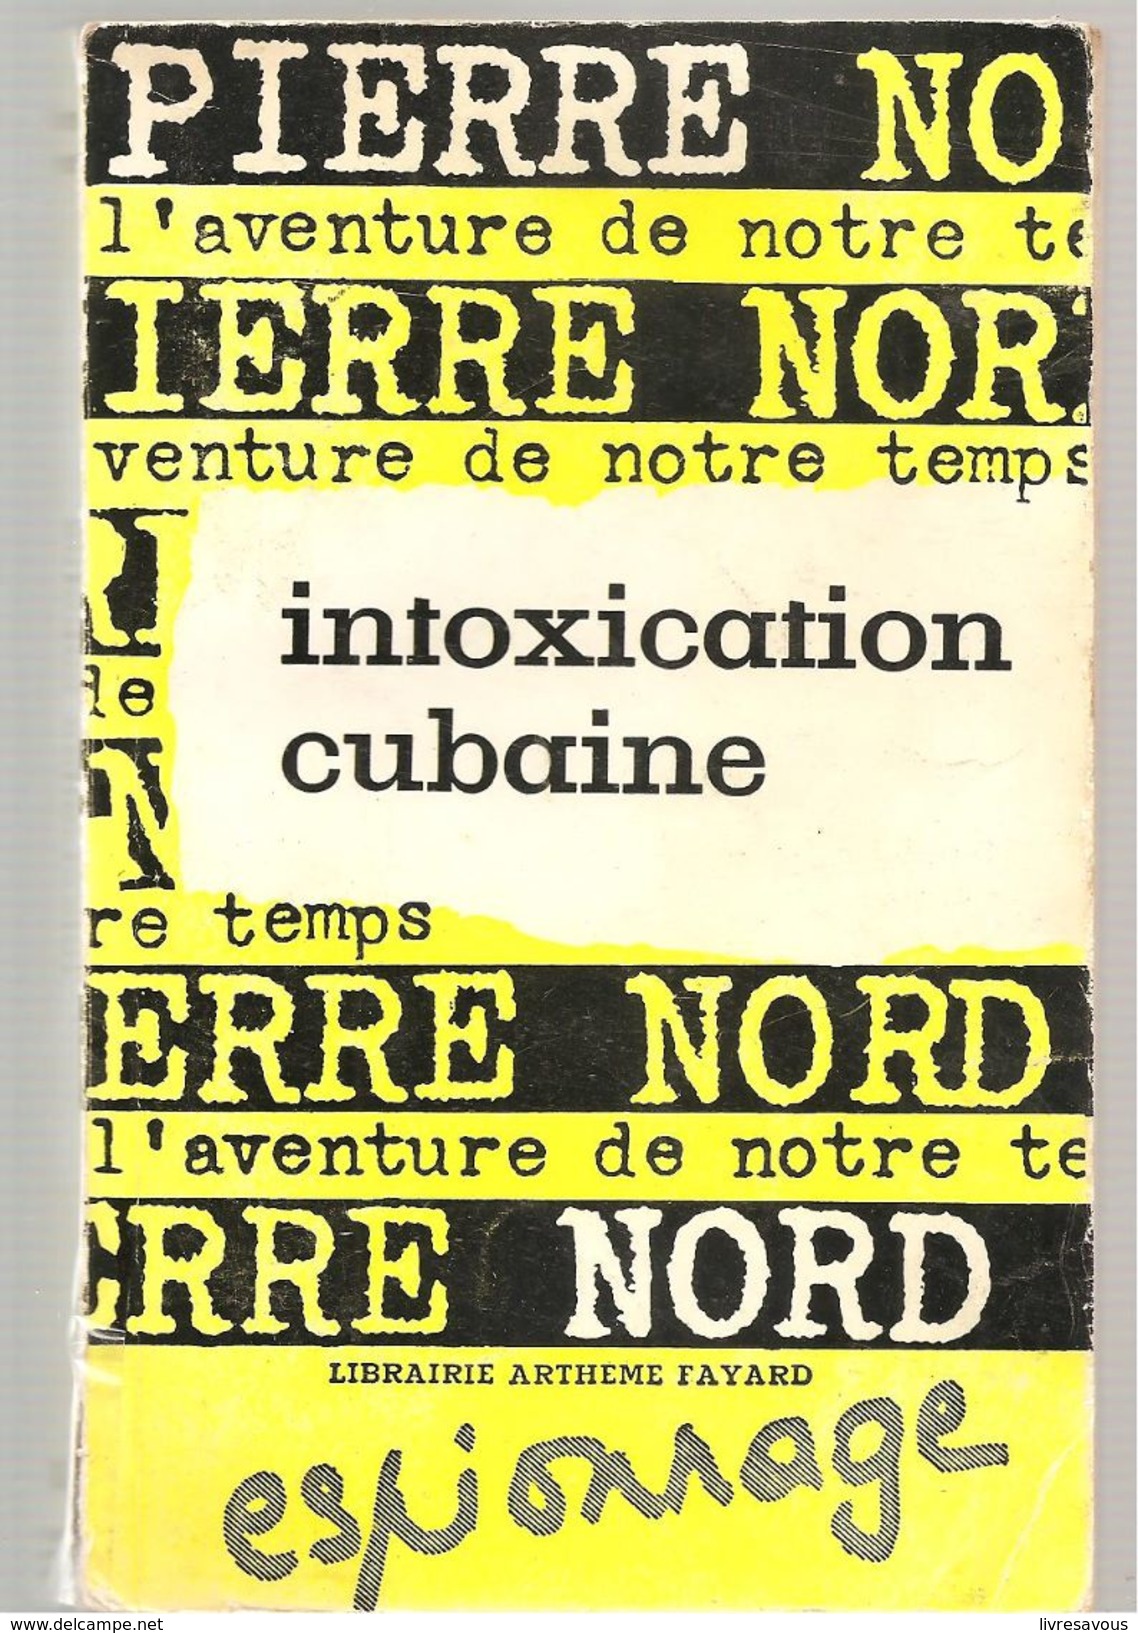 Pierre Nord Intoxication Cubaine N°30 De 1961 Librairie Artheme Fayard - Pierre Nord